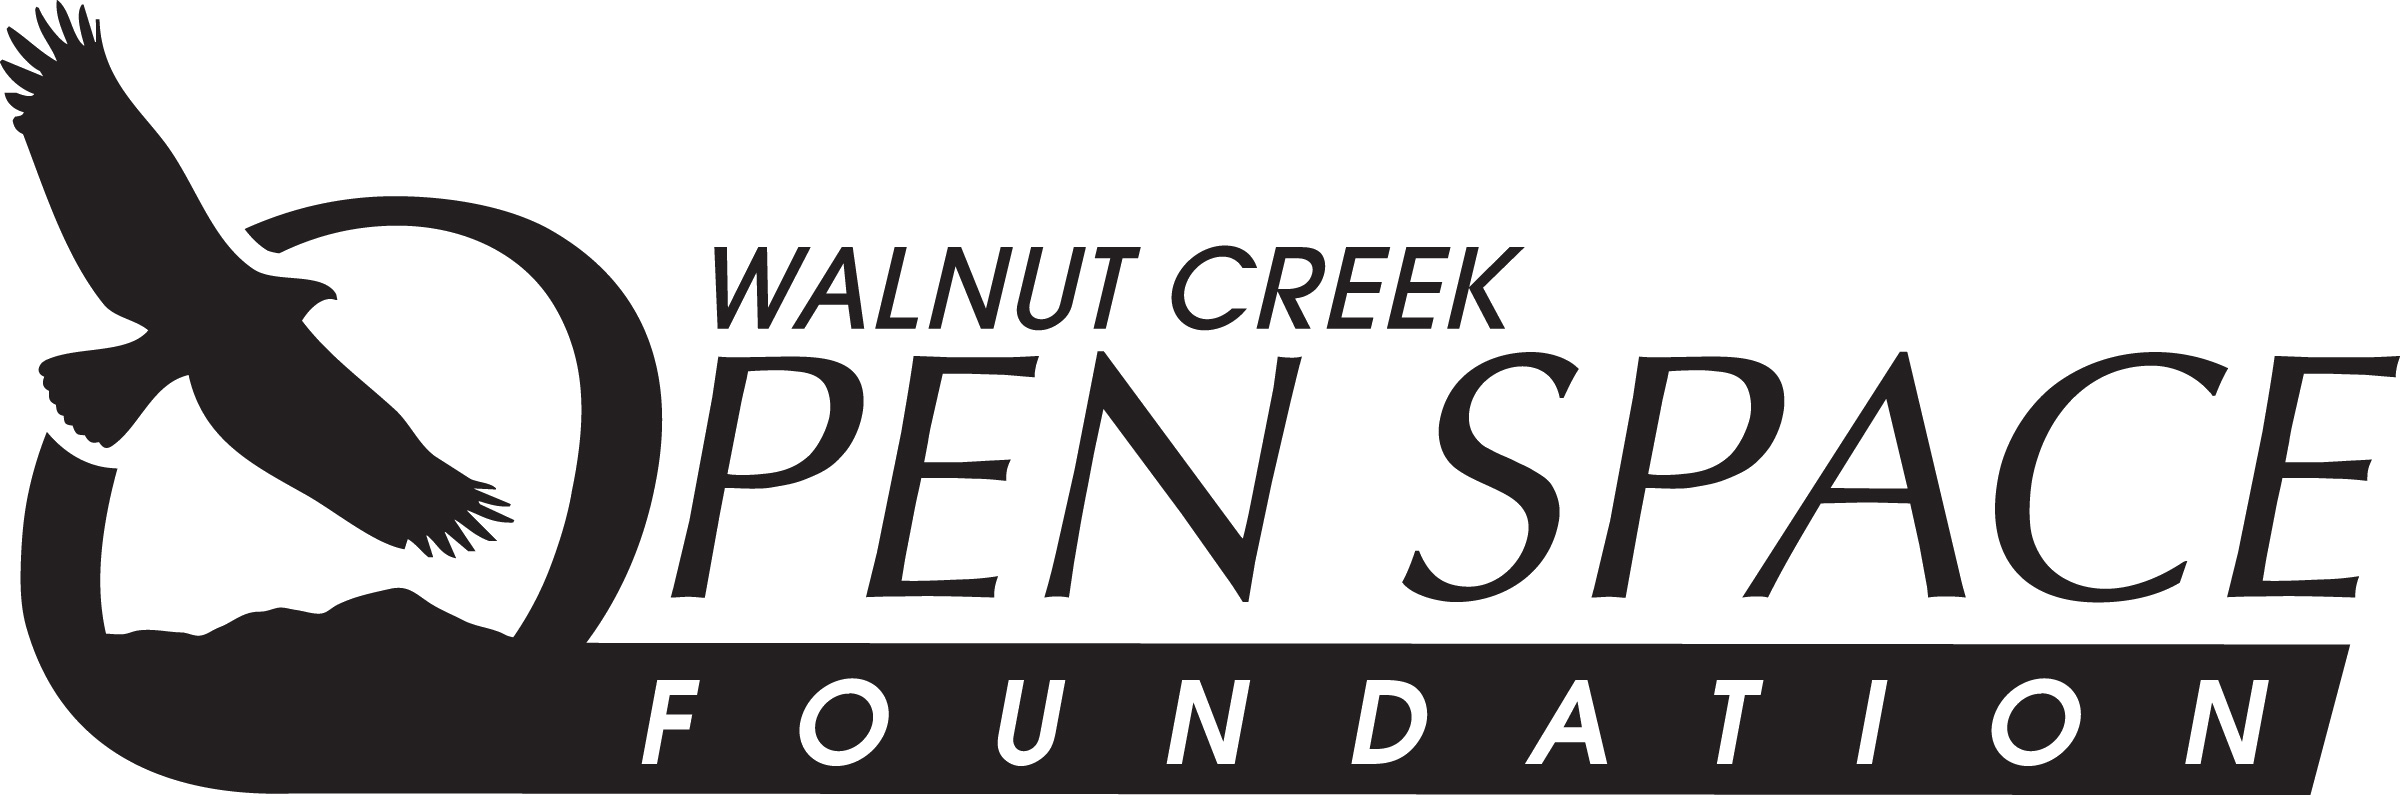 Walnut Creek Open Space Foundation Home